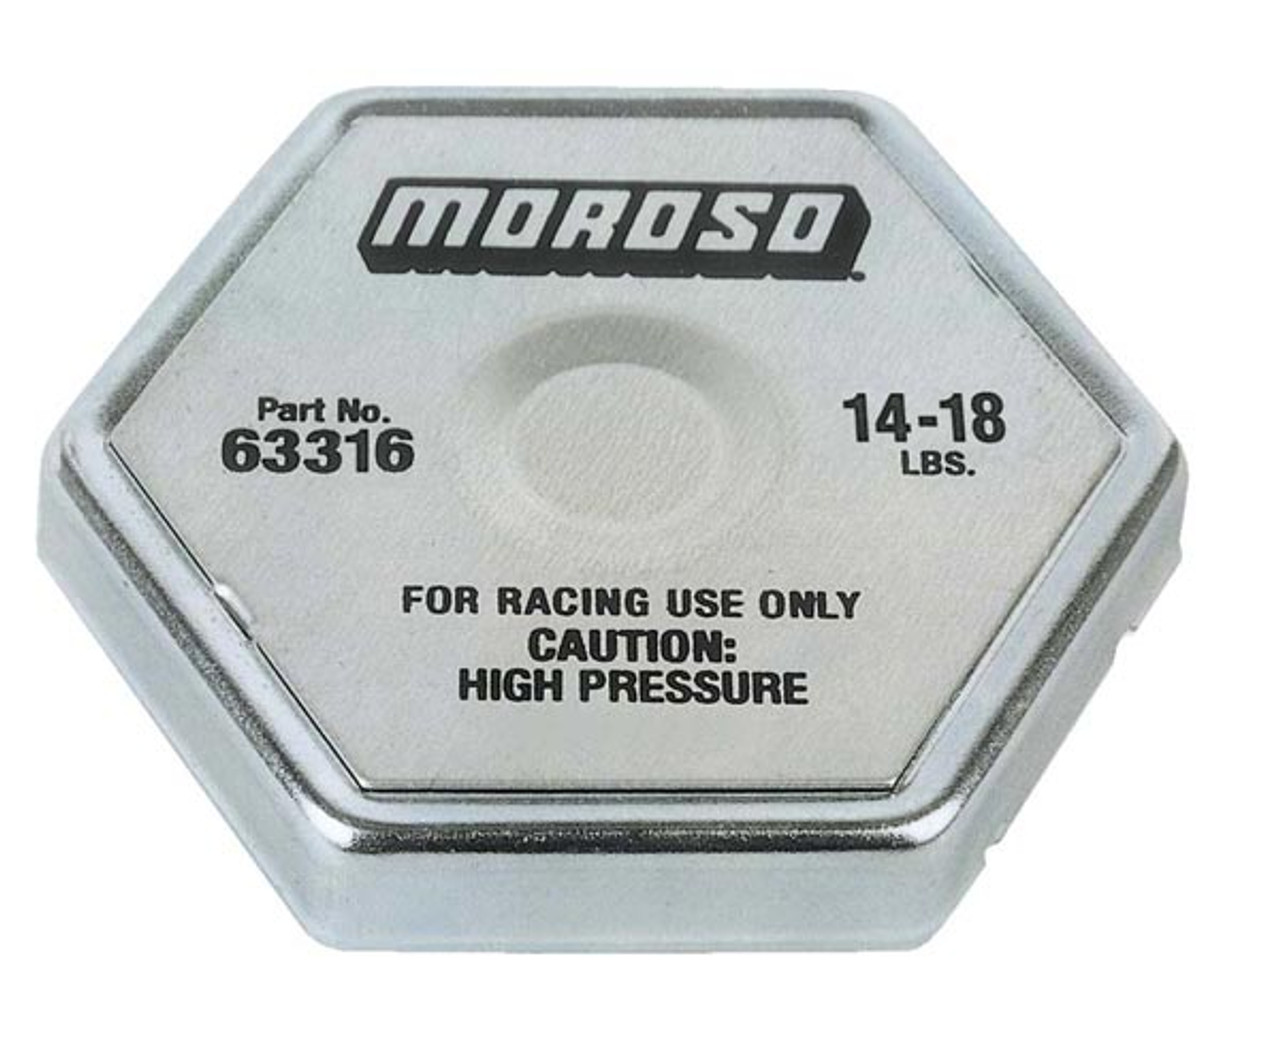 Moroso 63316 Racing Radiator Cap - 14-18 psi - Hex Head - Standard Size